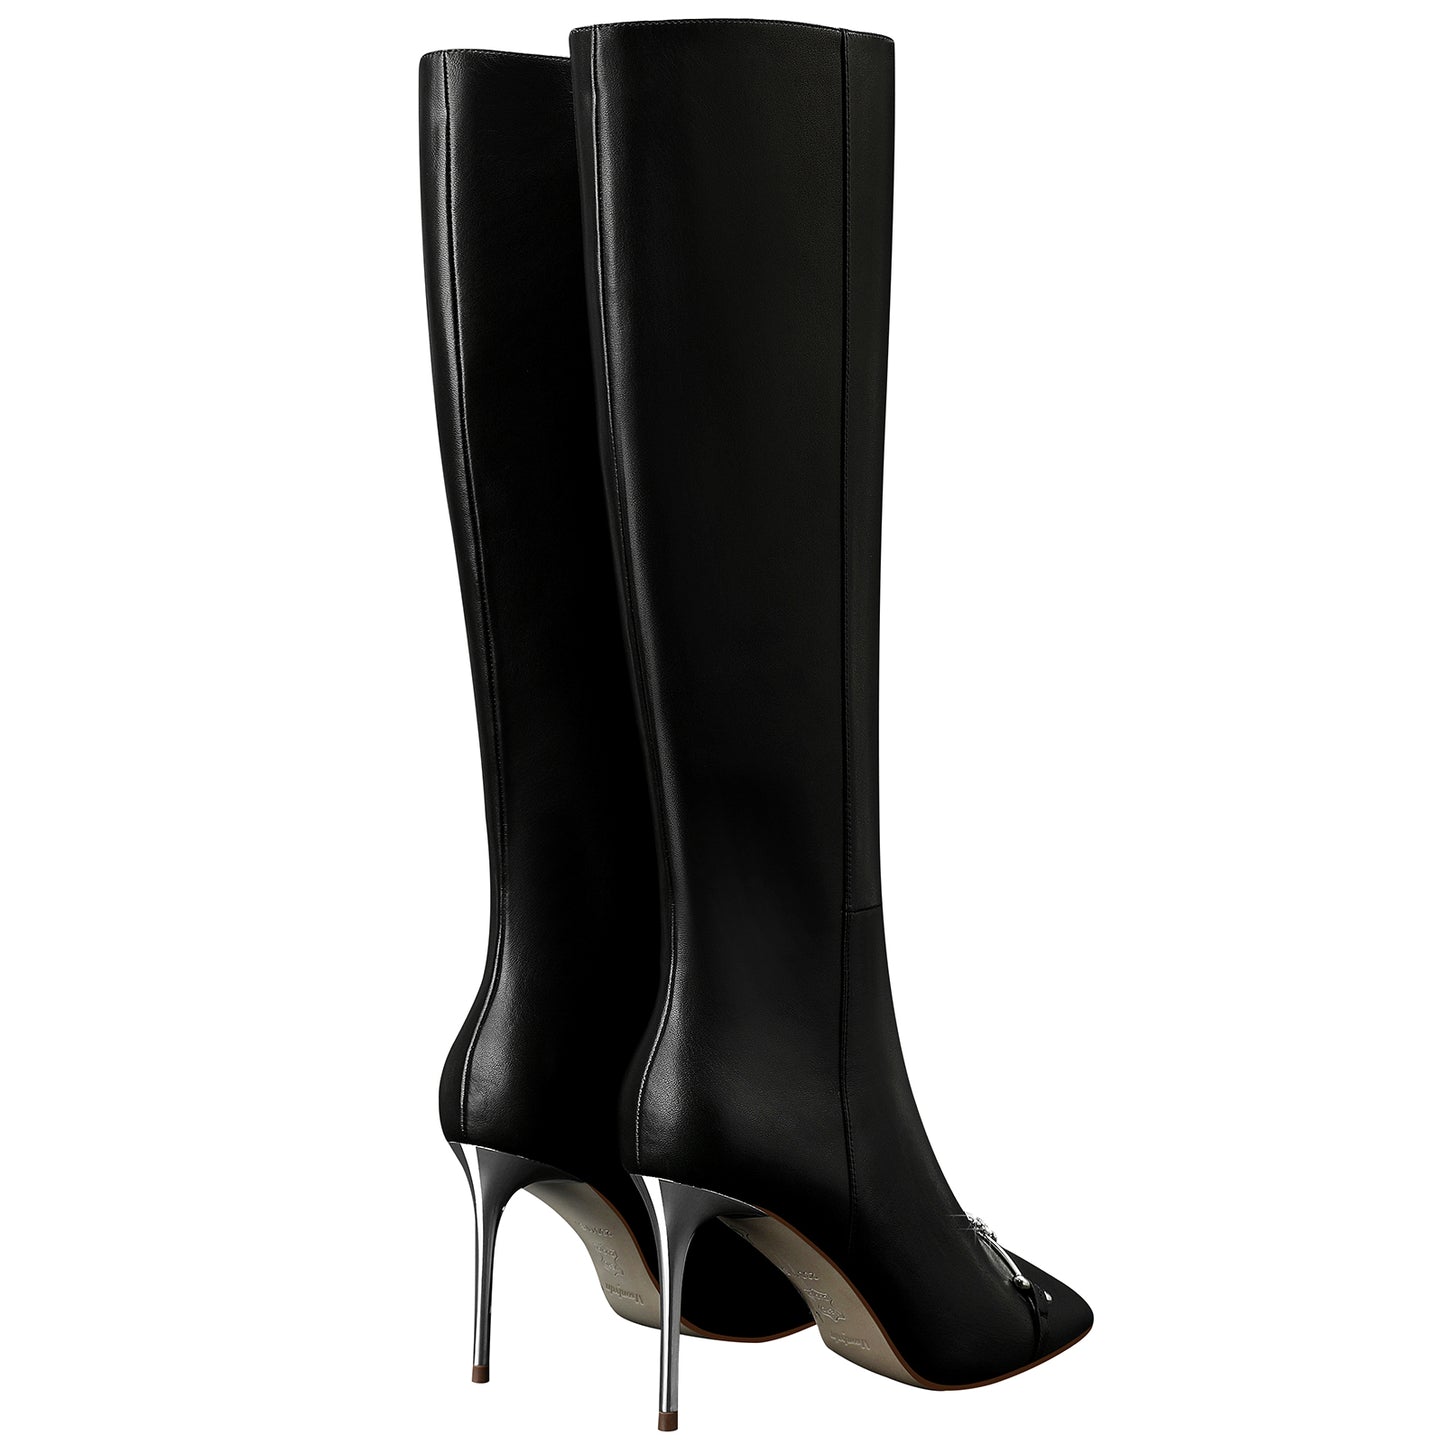 High Heels Knee Boots,Black Women Zipper Casual Tall Boots with Jewel